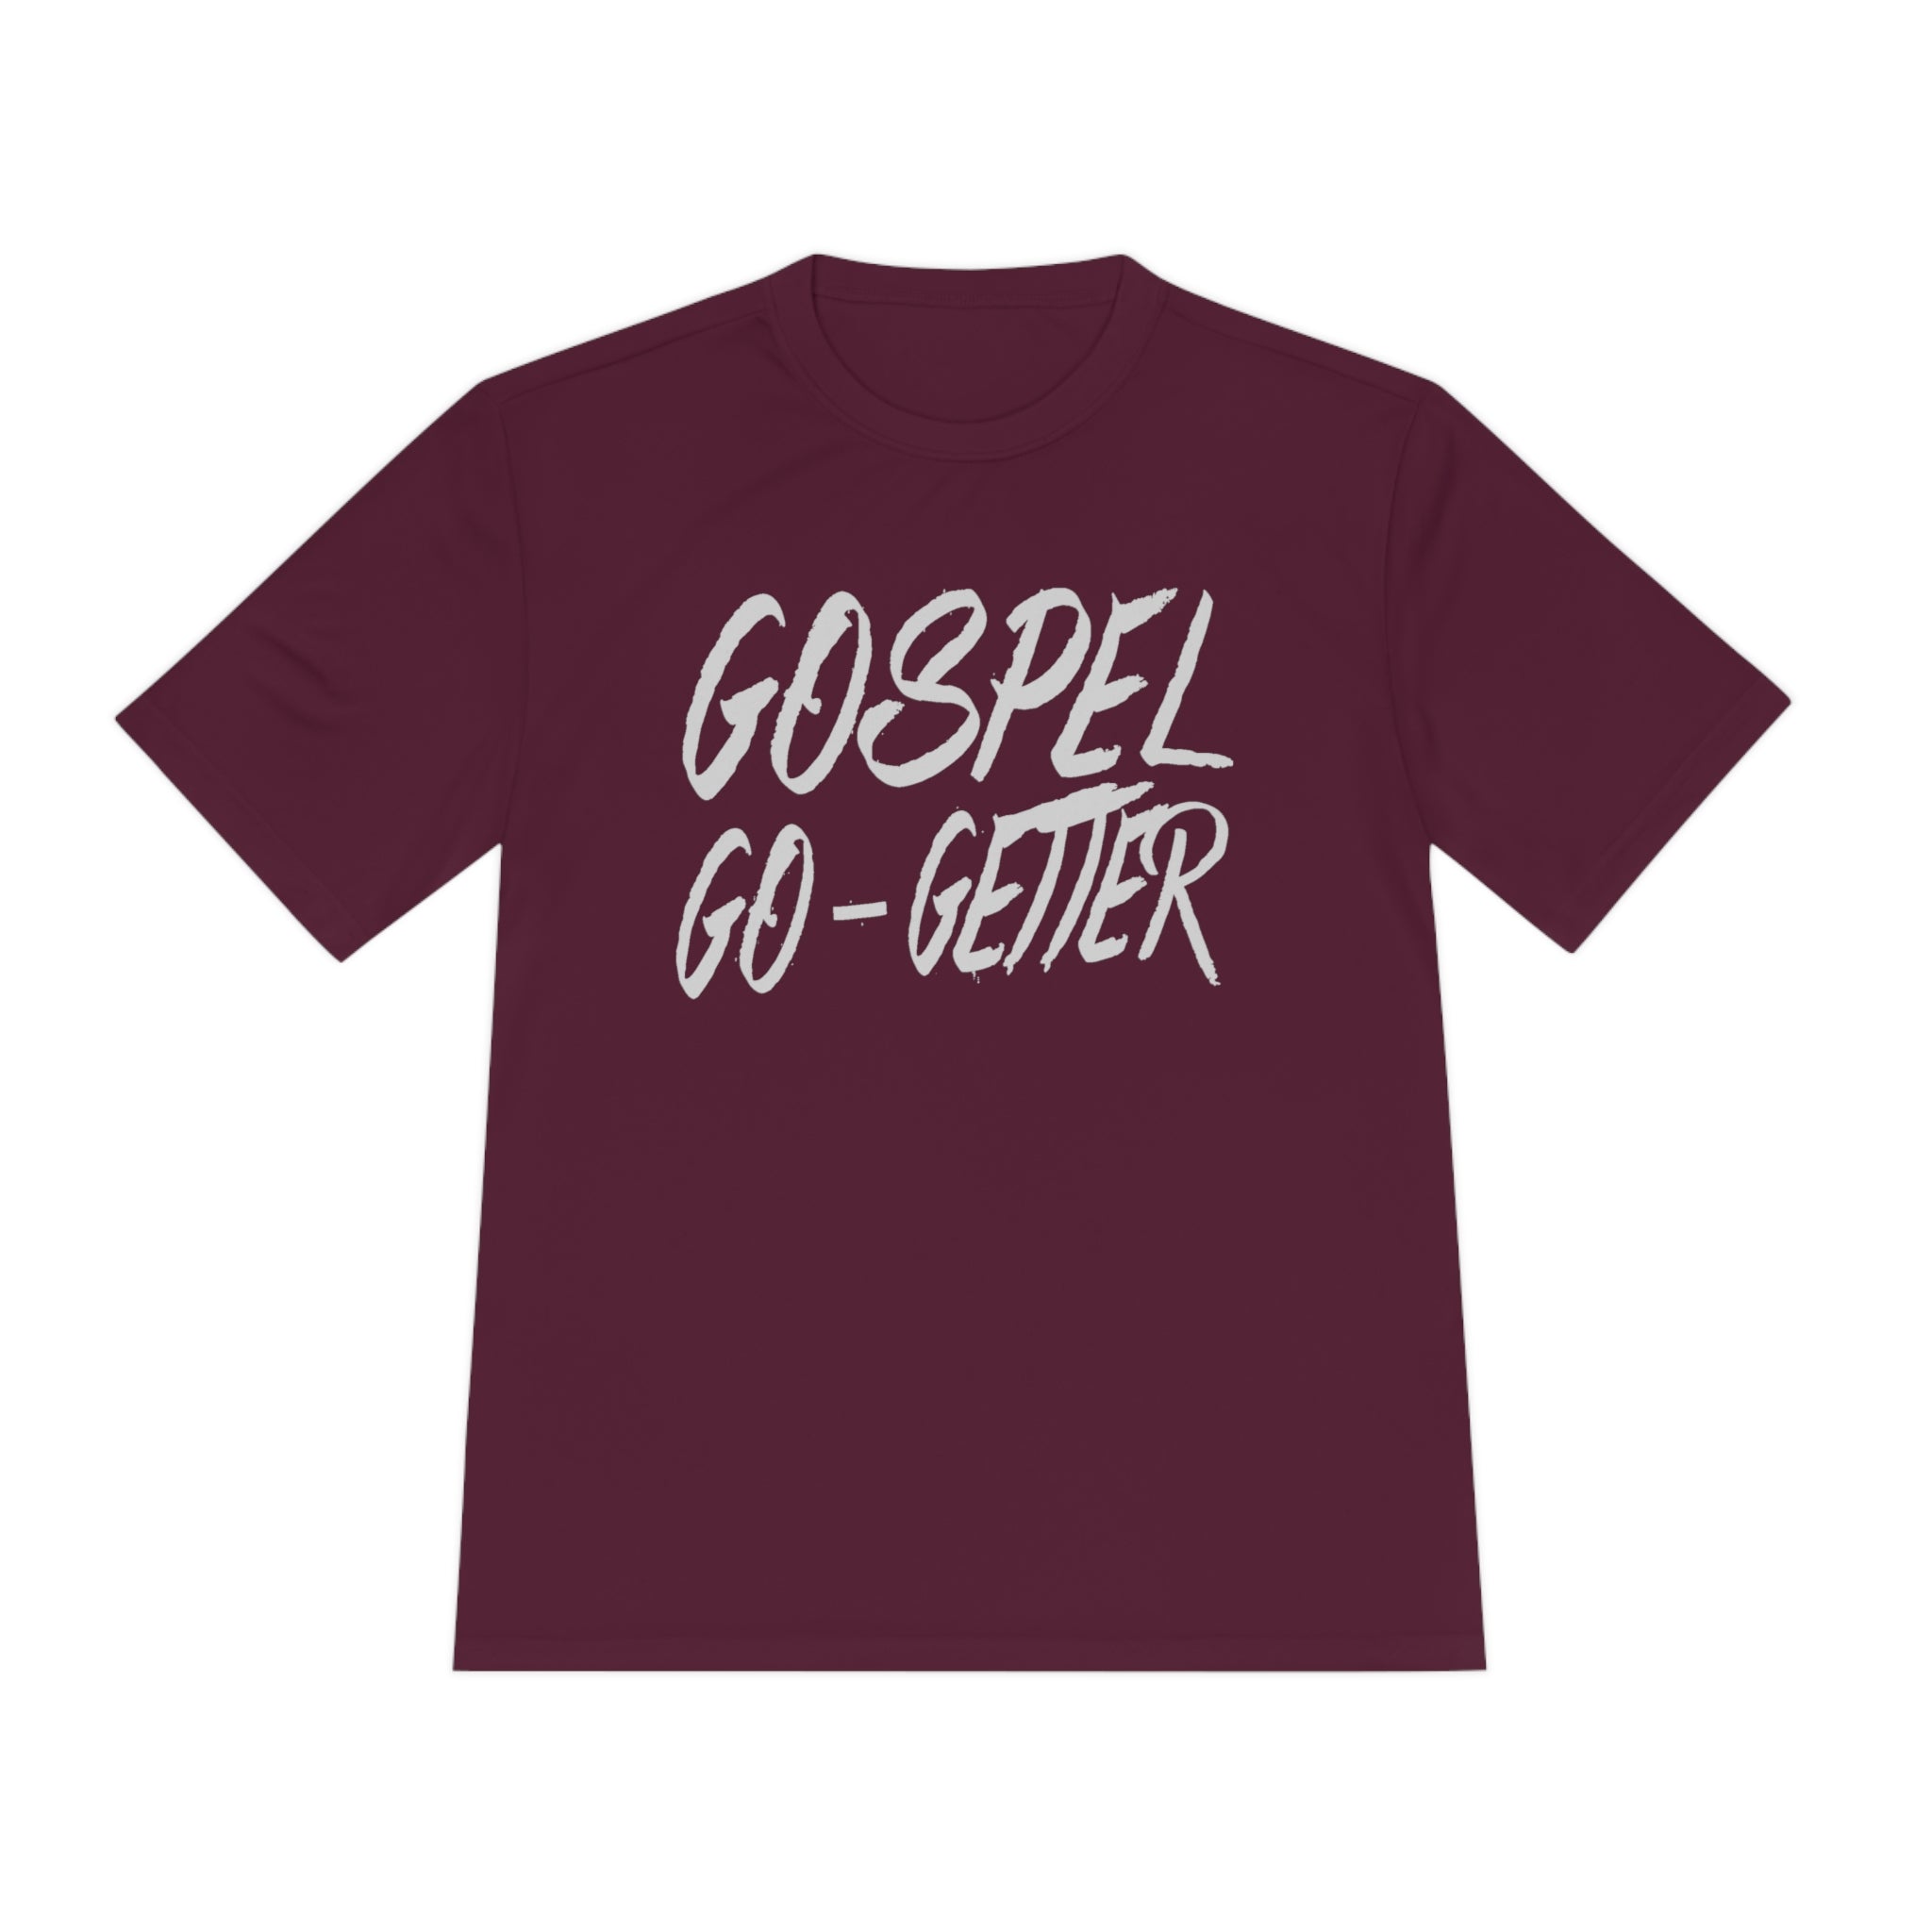 Gospel Go-Getter Athletic Tee